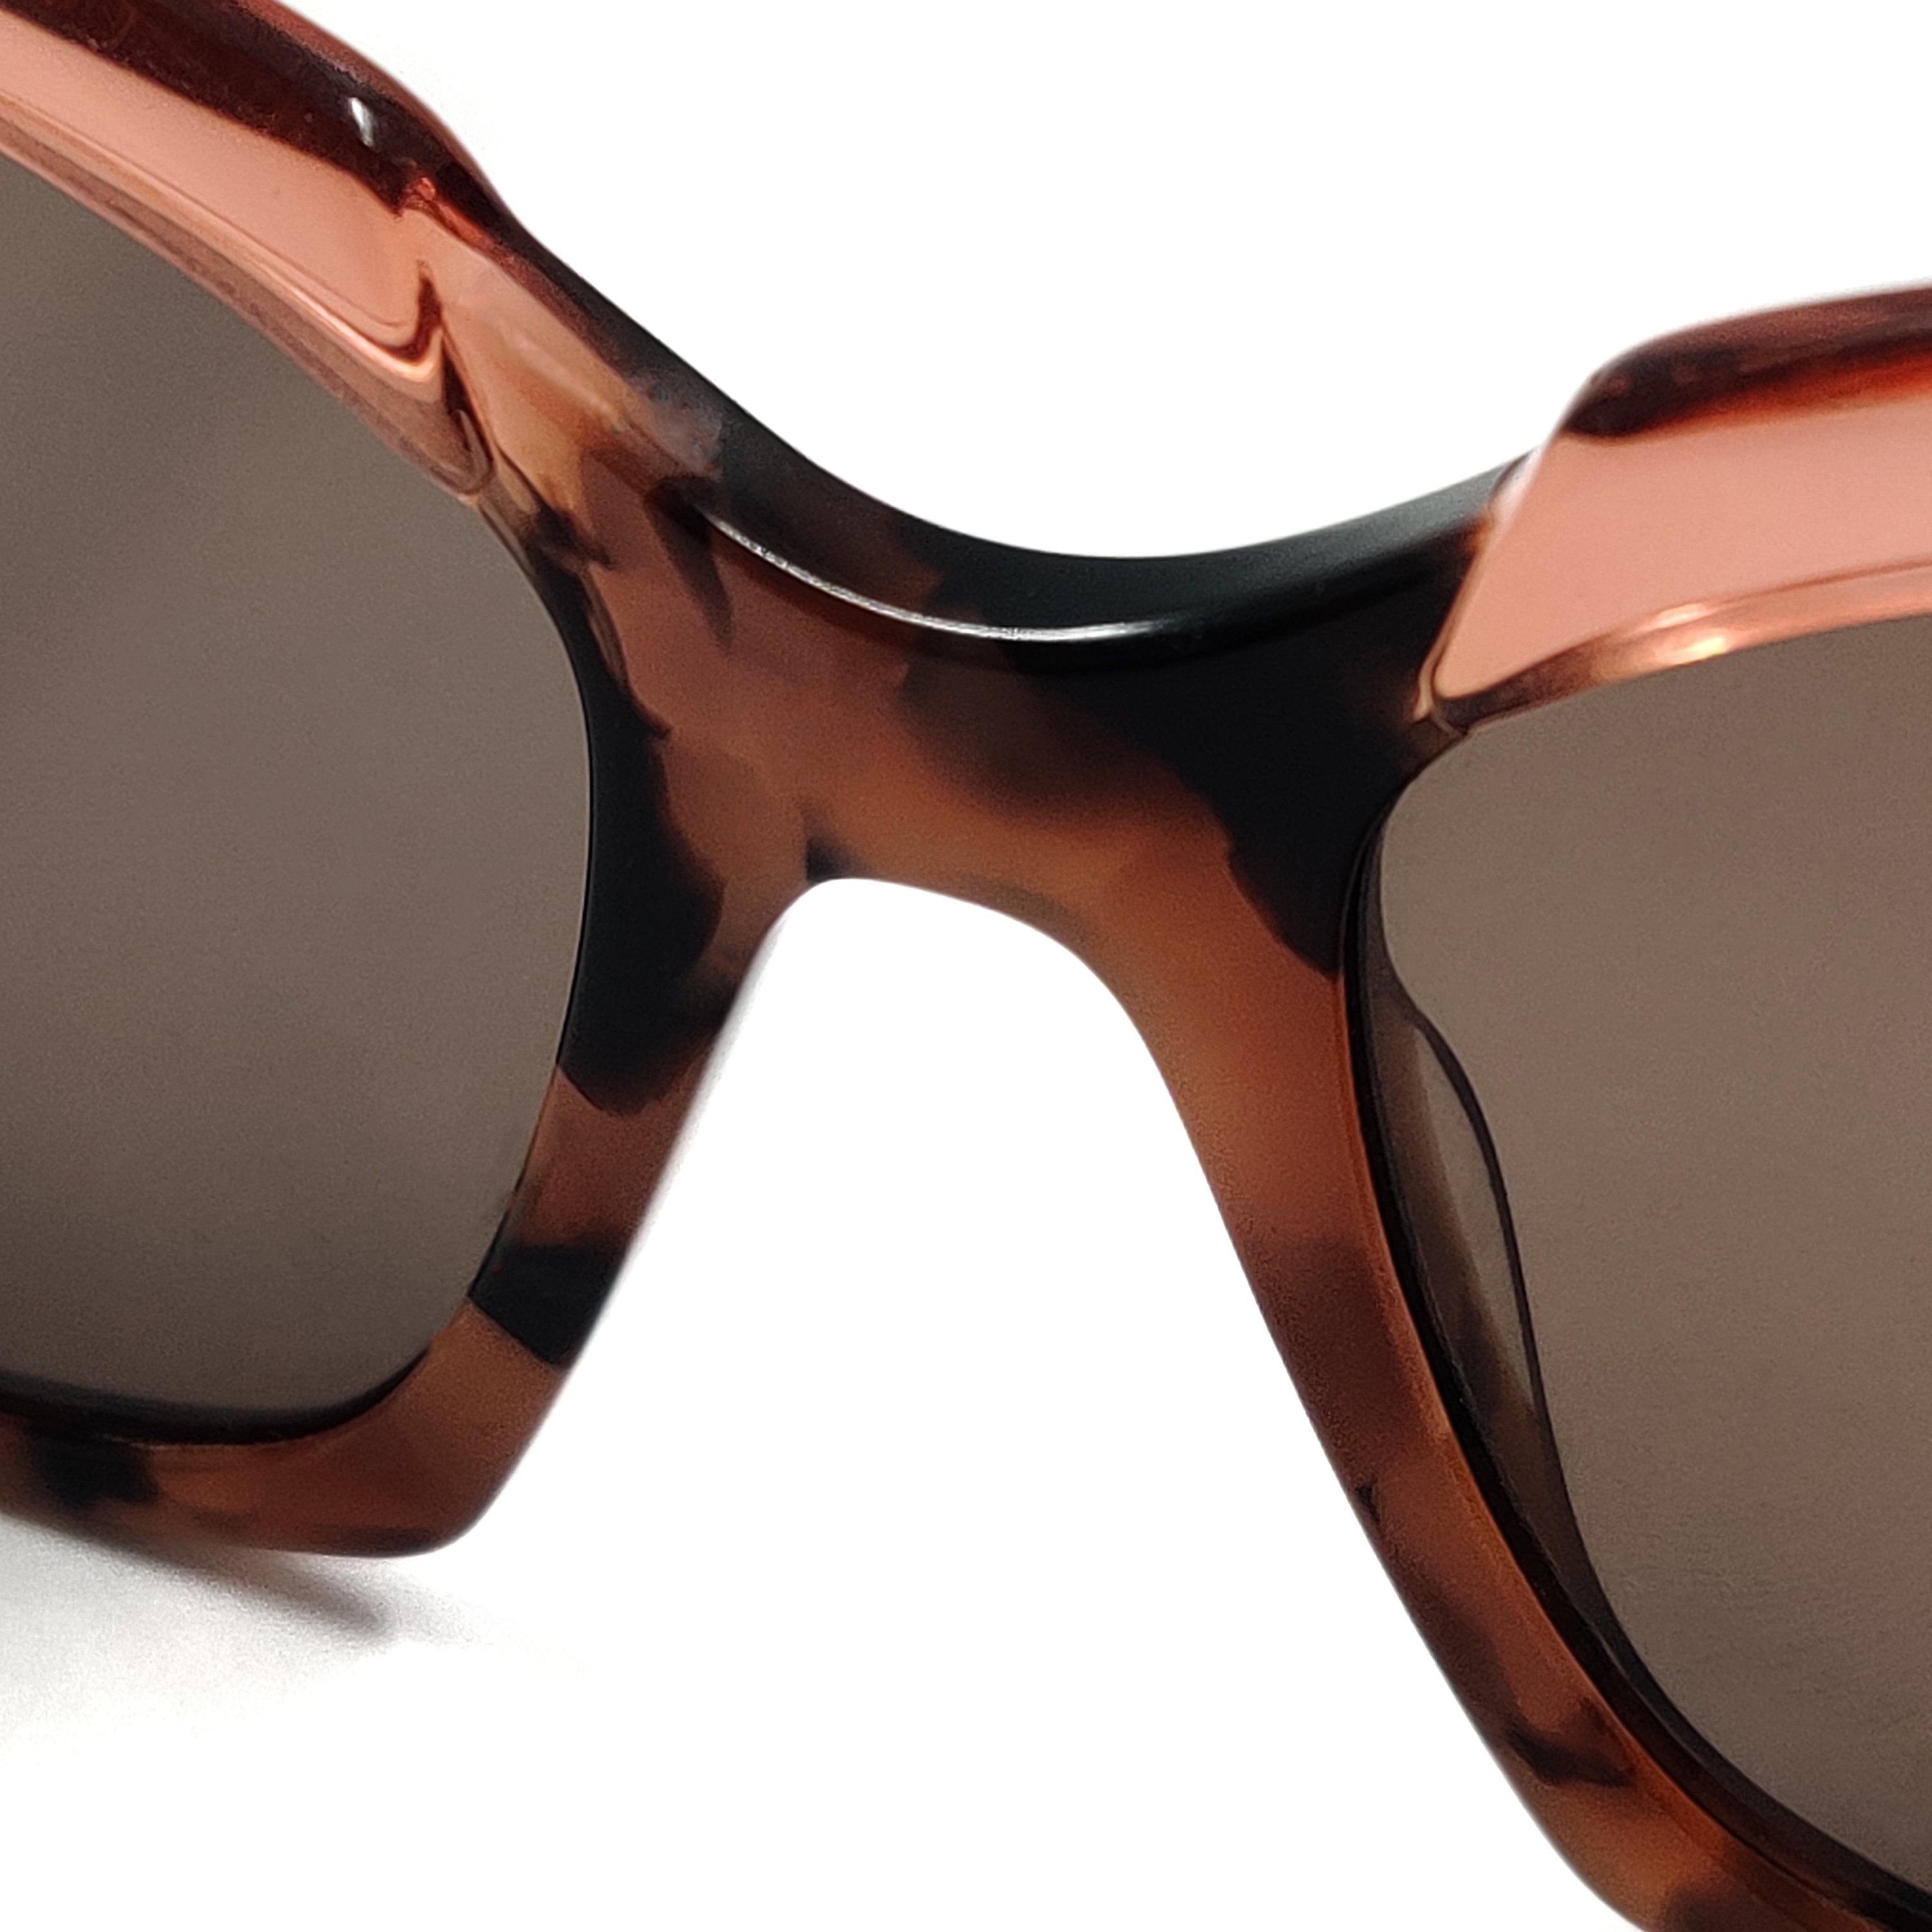 Sunglasses Glass Lens Custom High Quality Sunglasses Factory Direct Spectacles